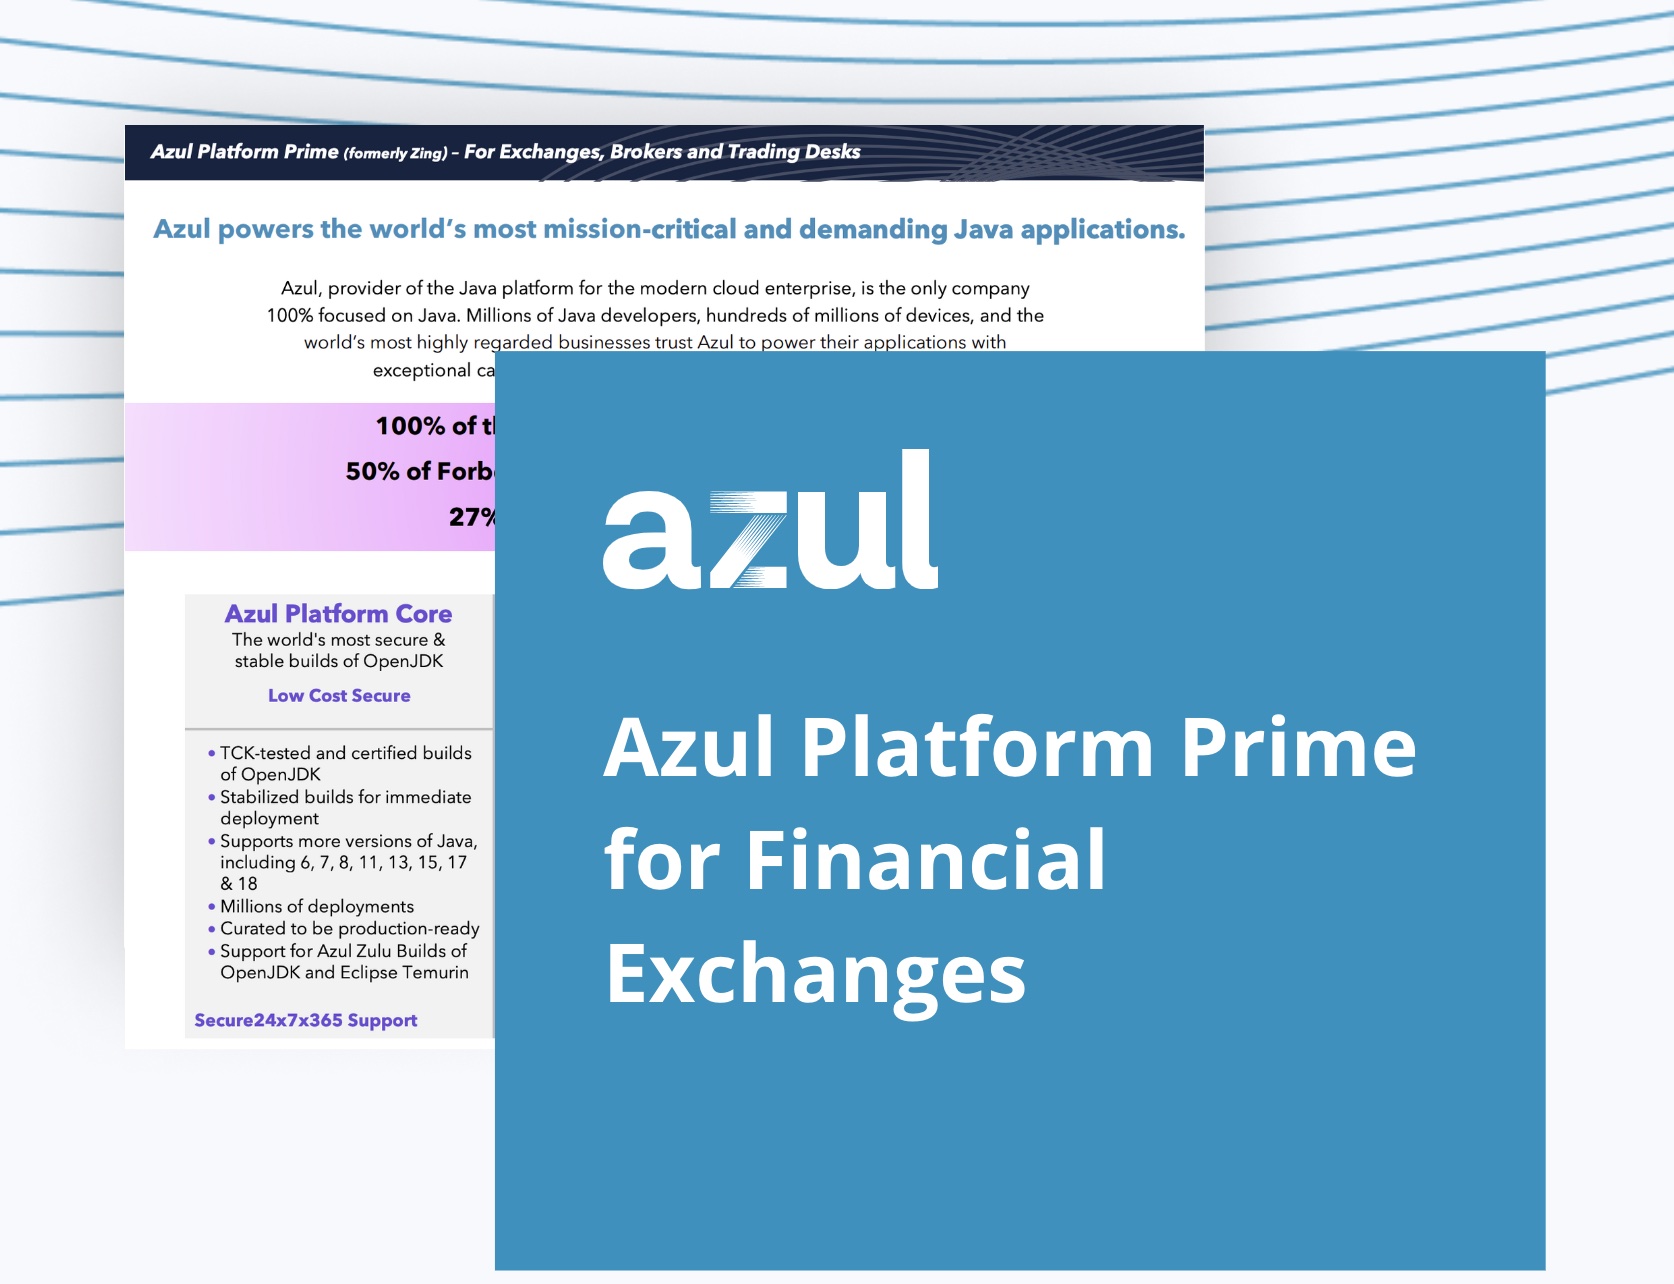 Azul Platform Prime for Financial Exchanges